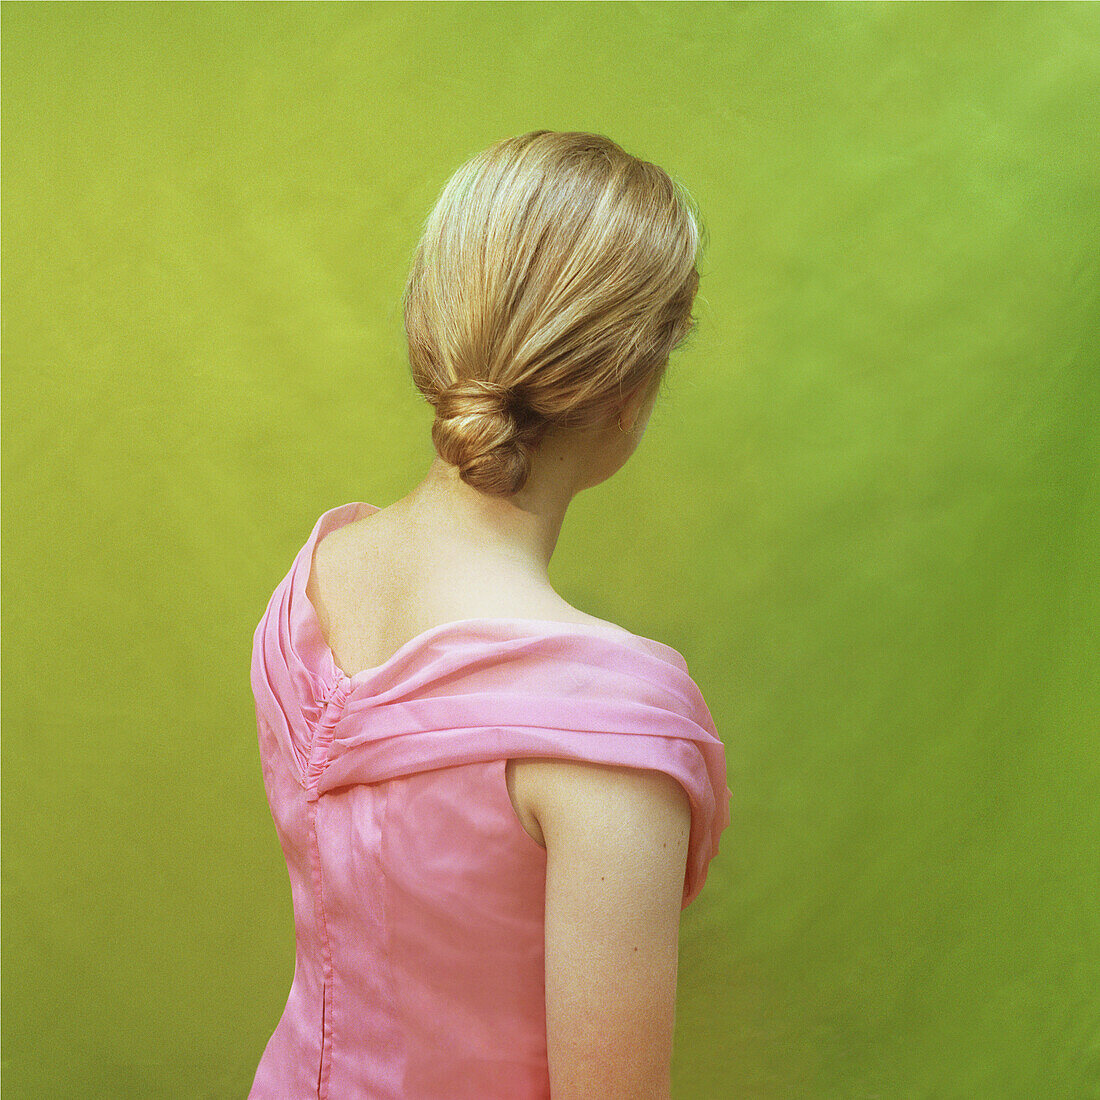 Blonde Teenage Girl in Pink Dress, Rear View